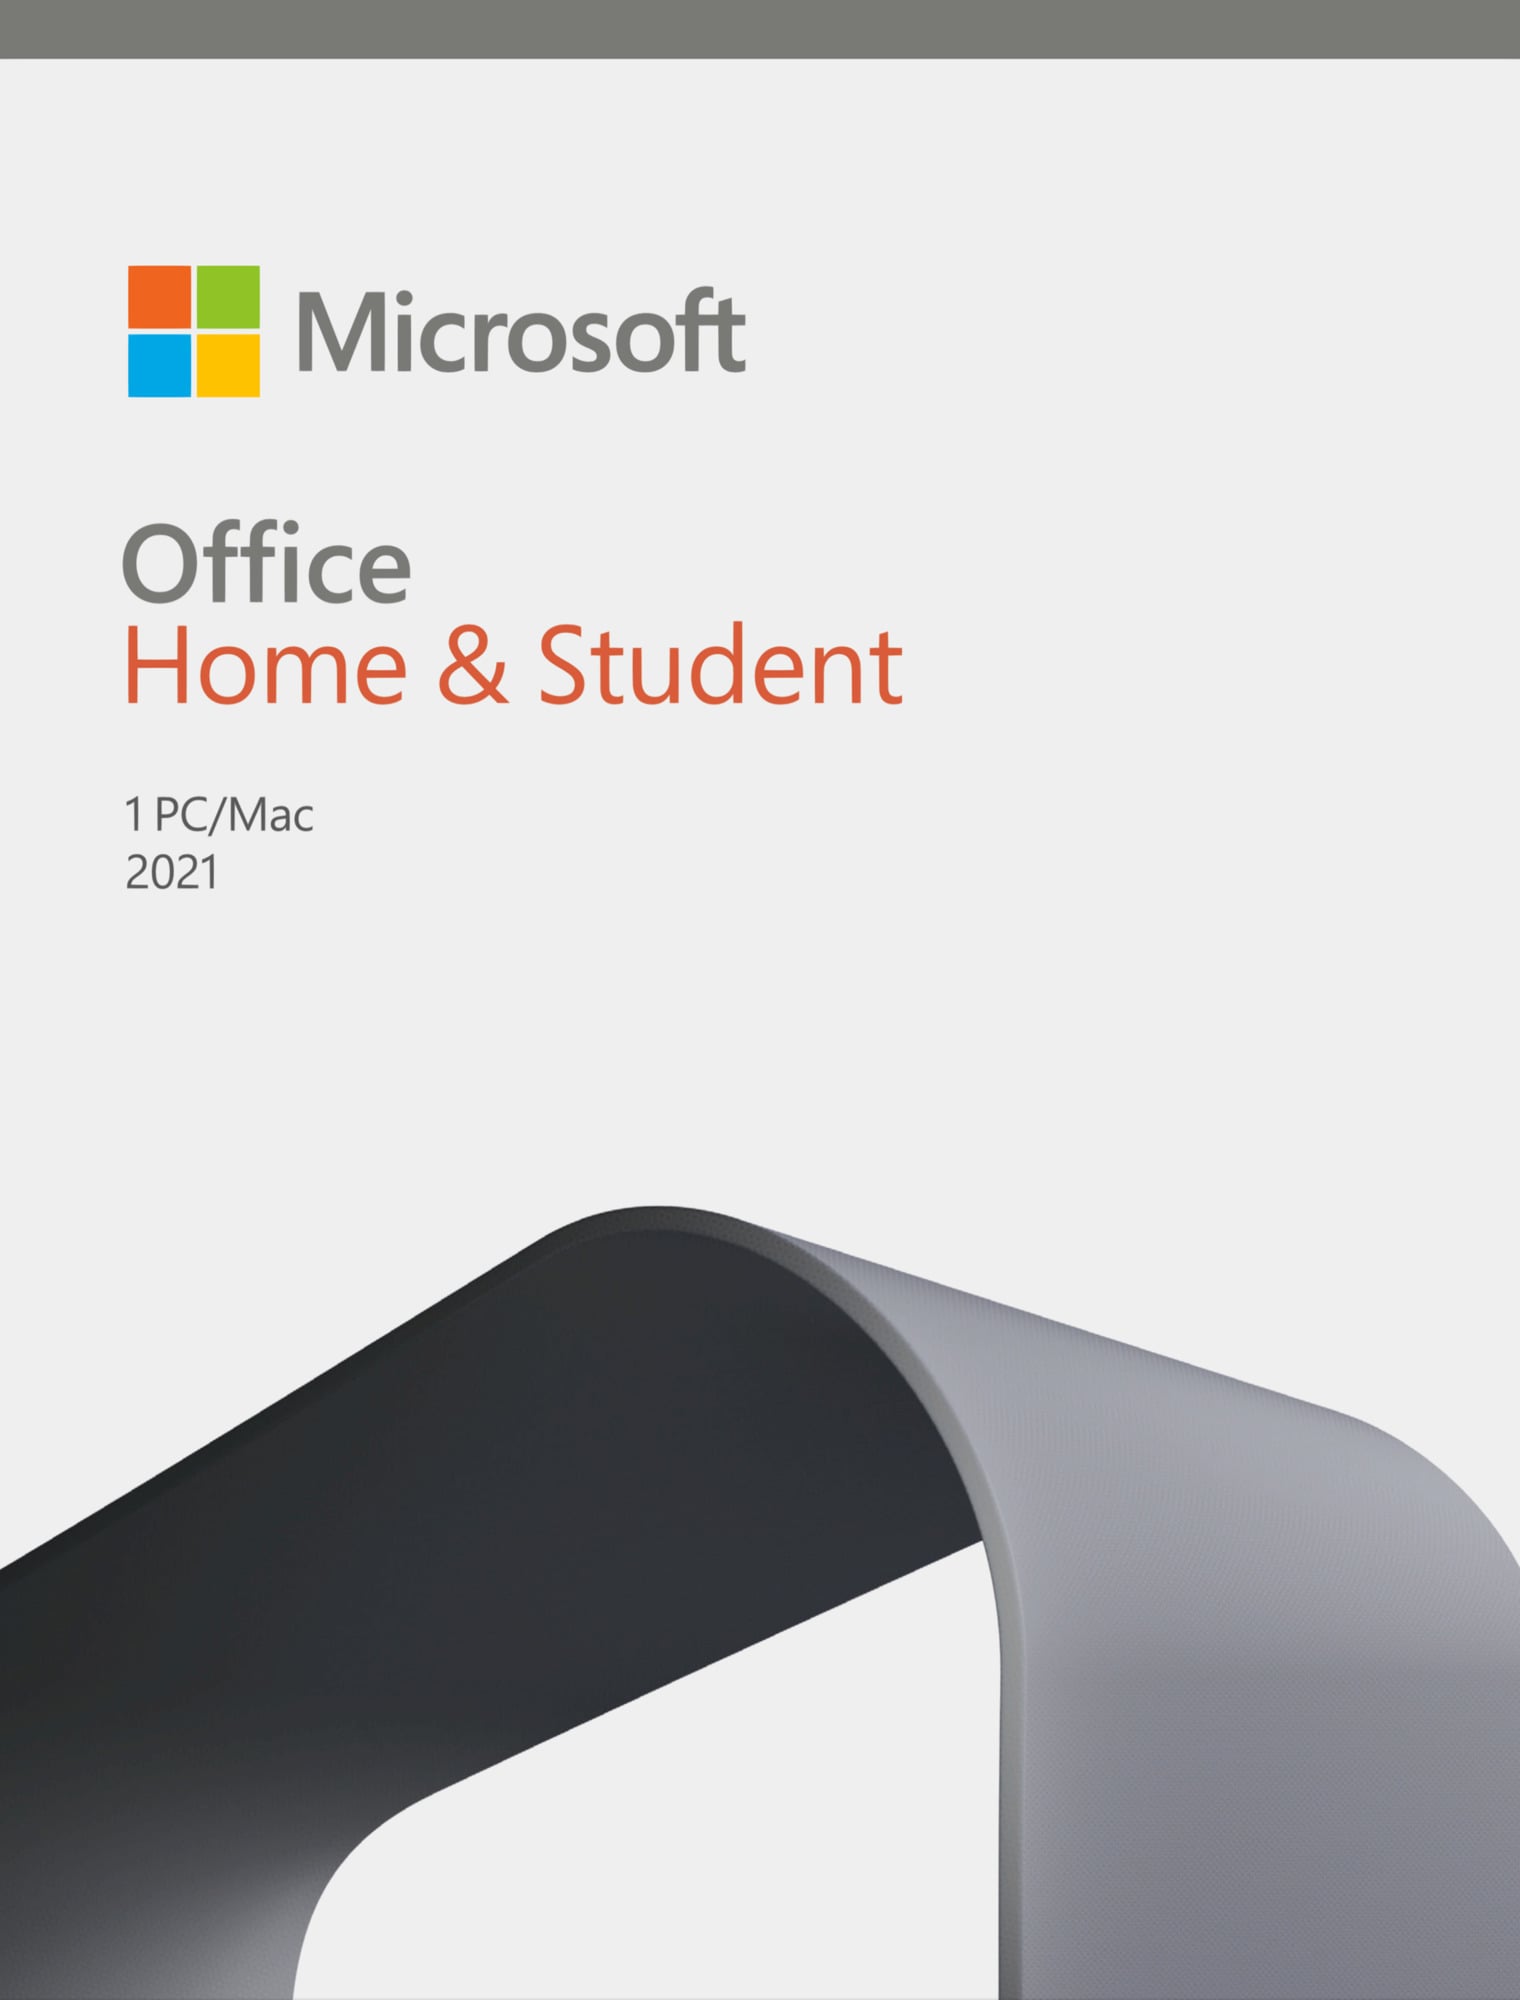 Microsoft Office Home & Student 2021 Elgiganten